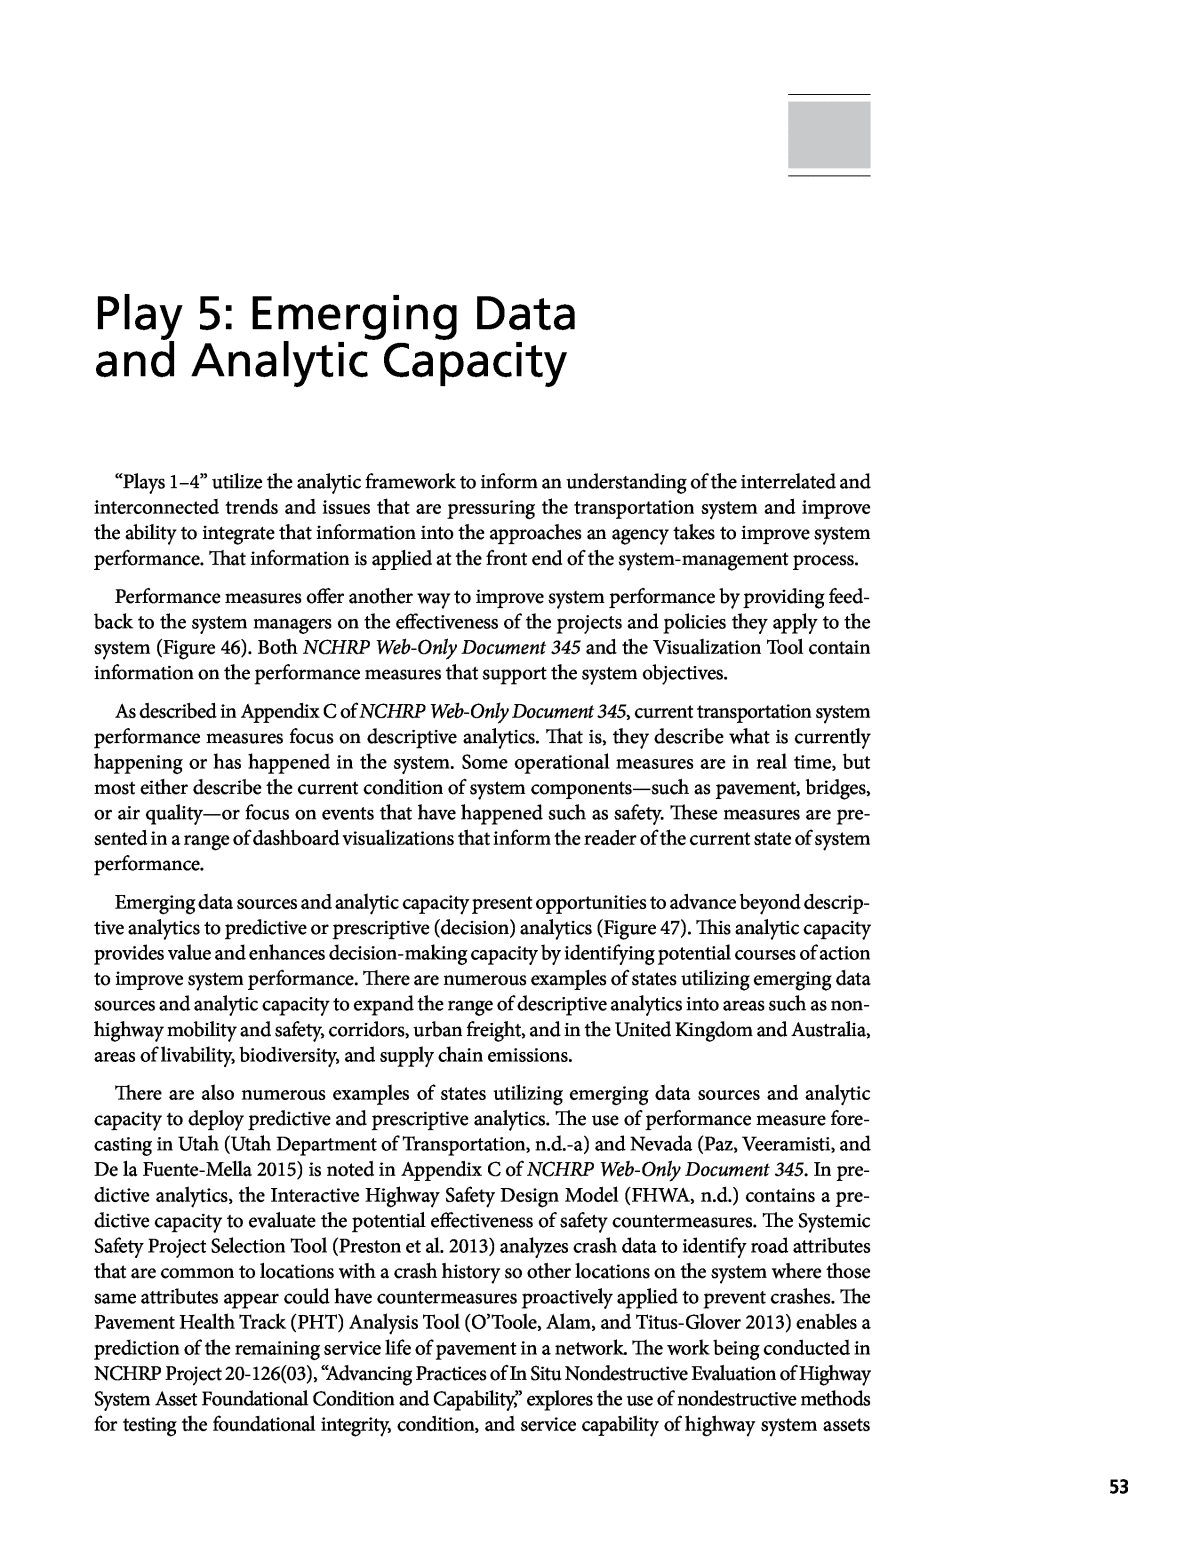 Play 5: Emerging Data and Analytic Capacity